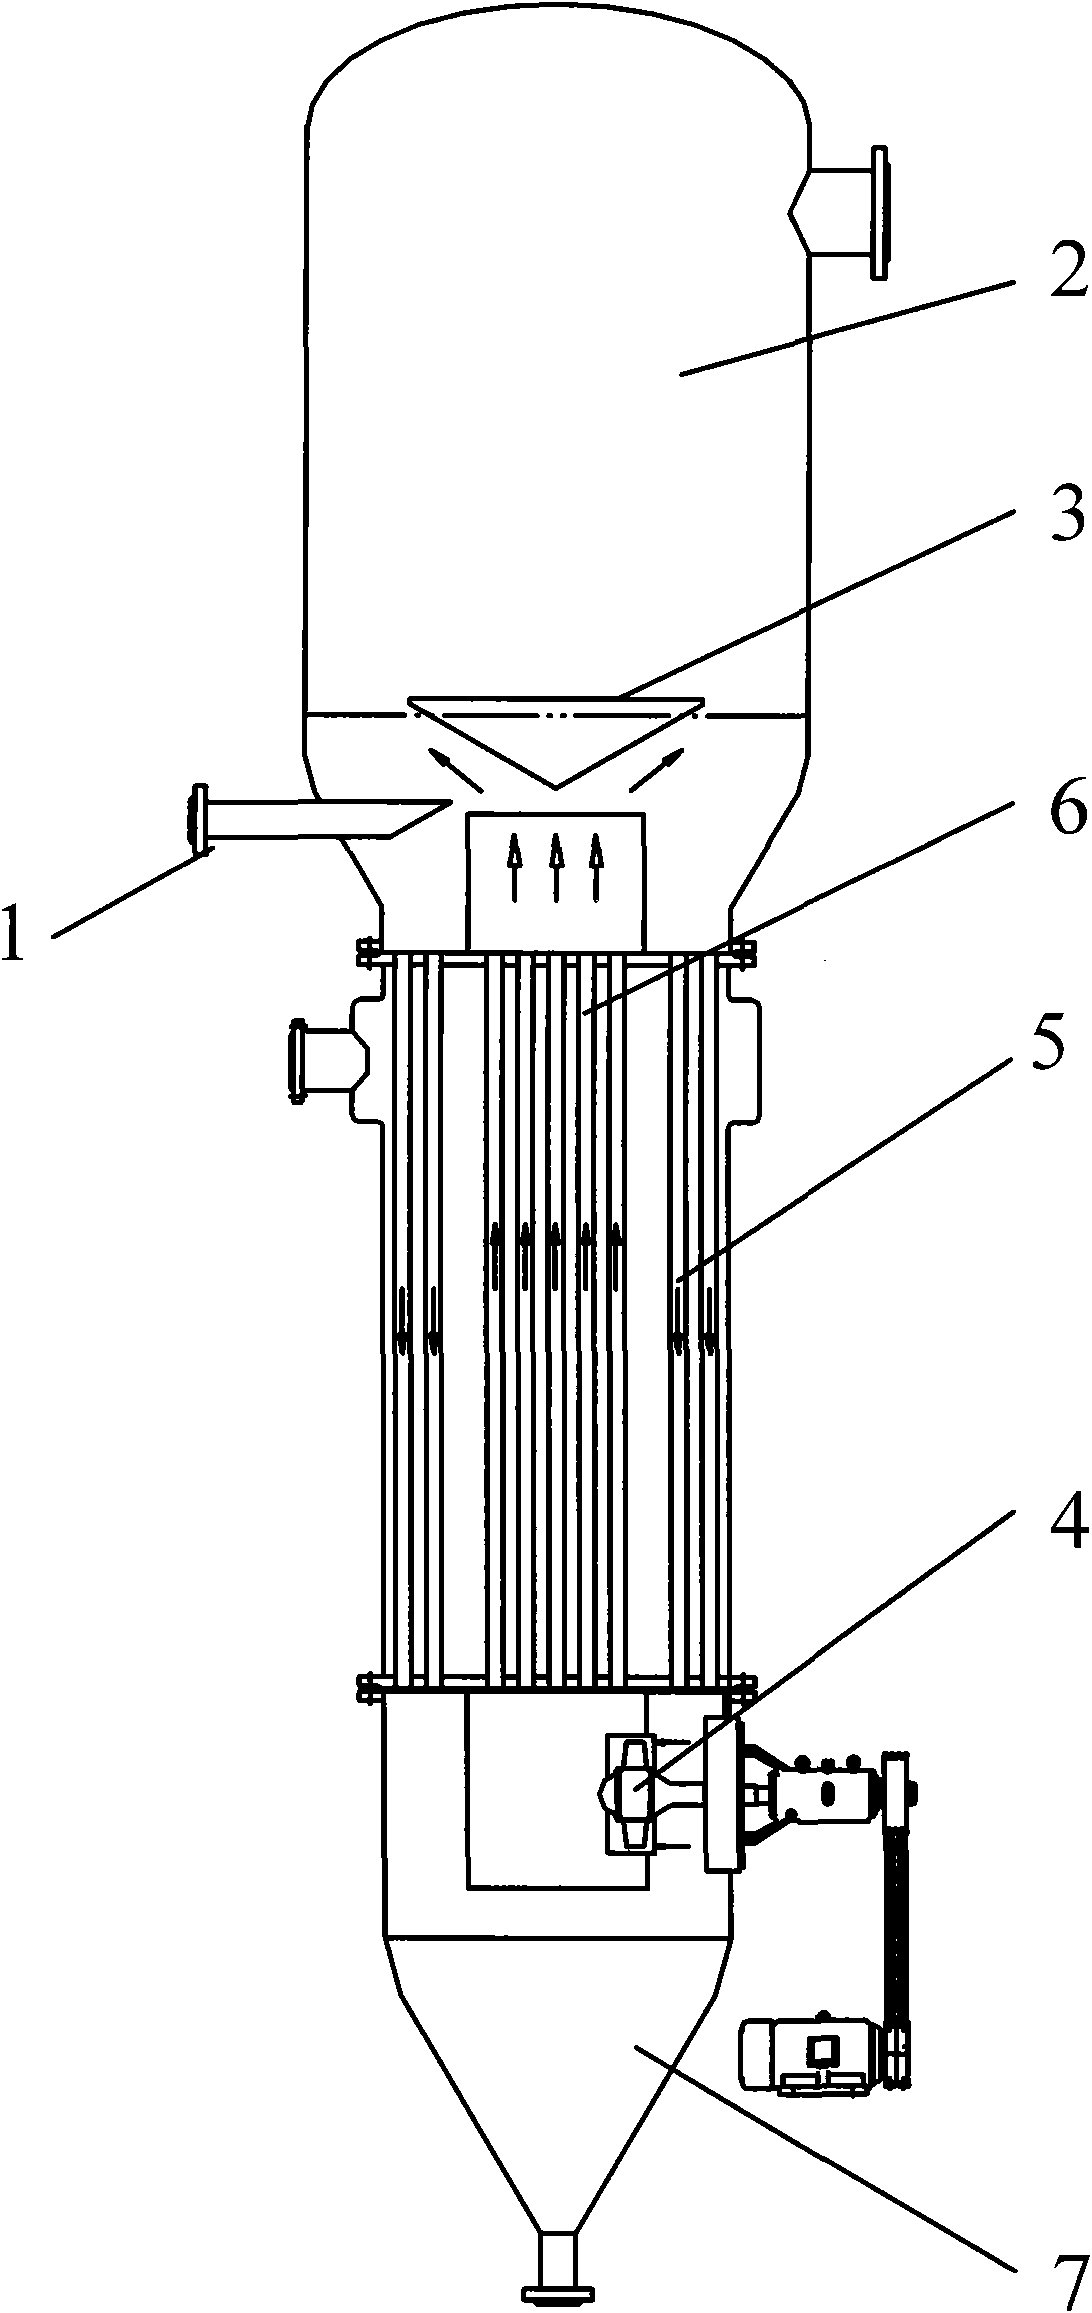 Internal circulation evaporator with settling chamber